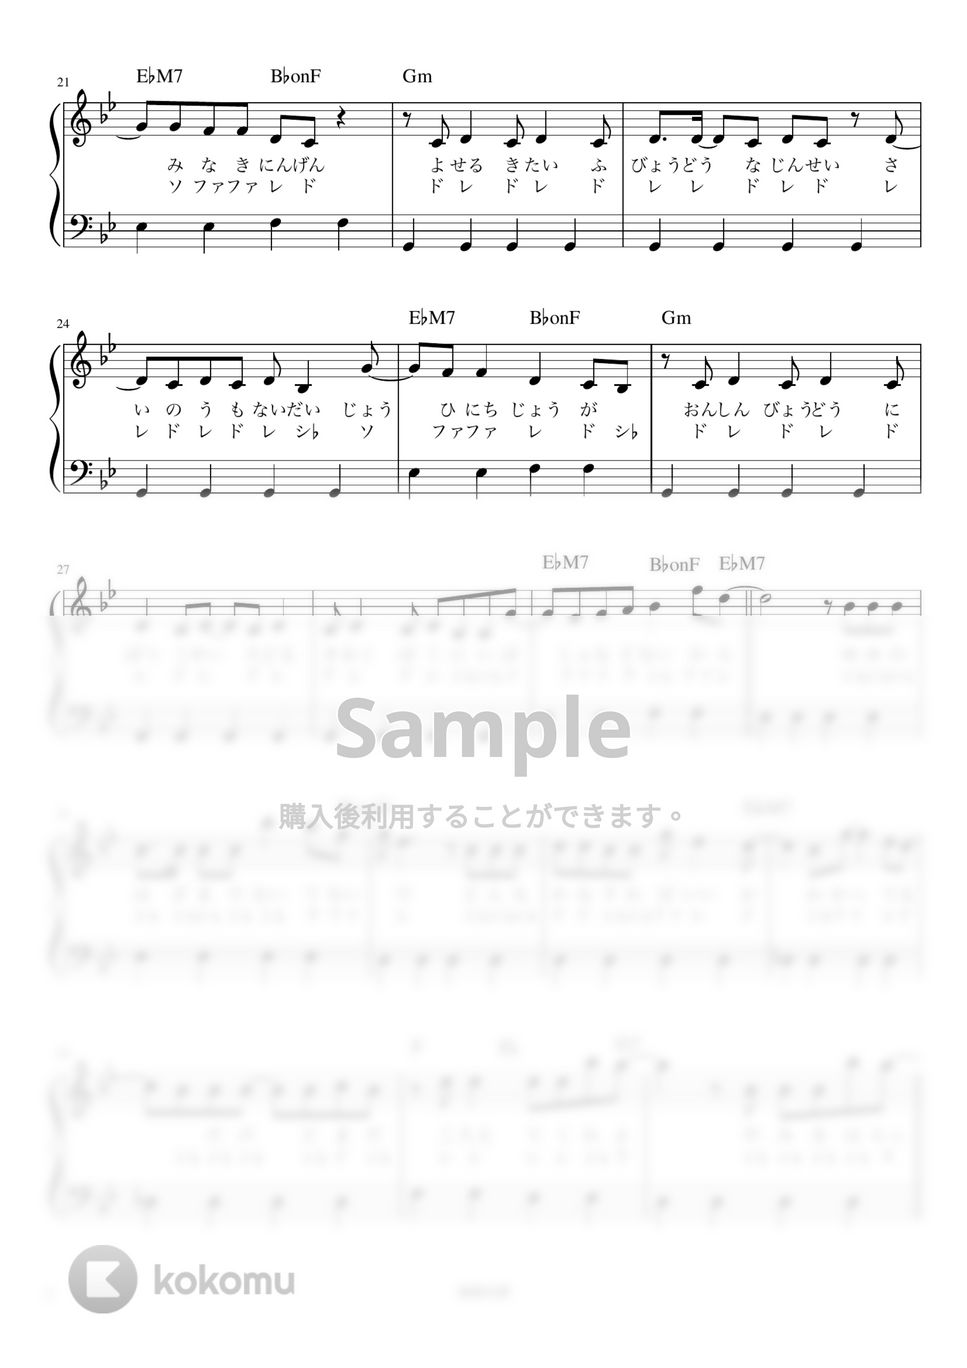 Eve - 廻廻奇譚 (かんたん / 歌詞付き / ドレミ付き / 初心者) by piano.tokyo